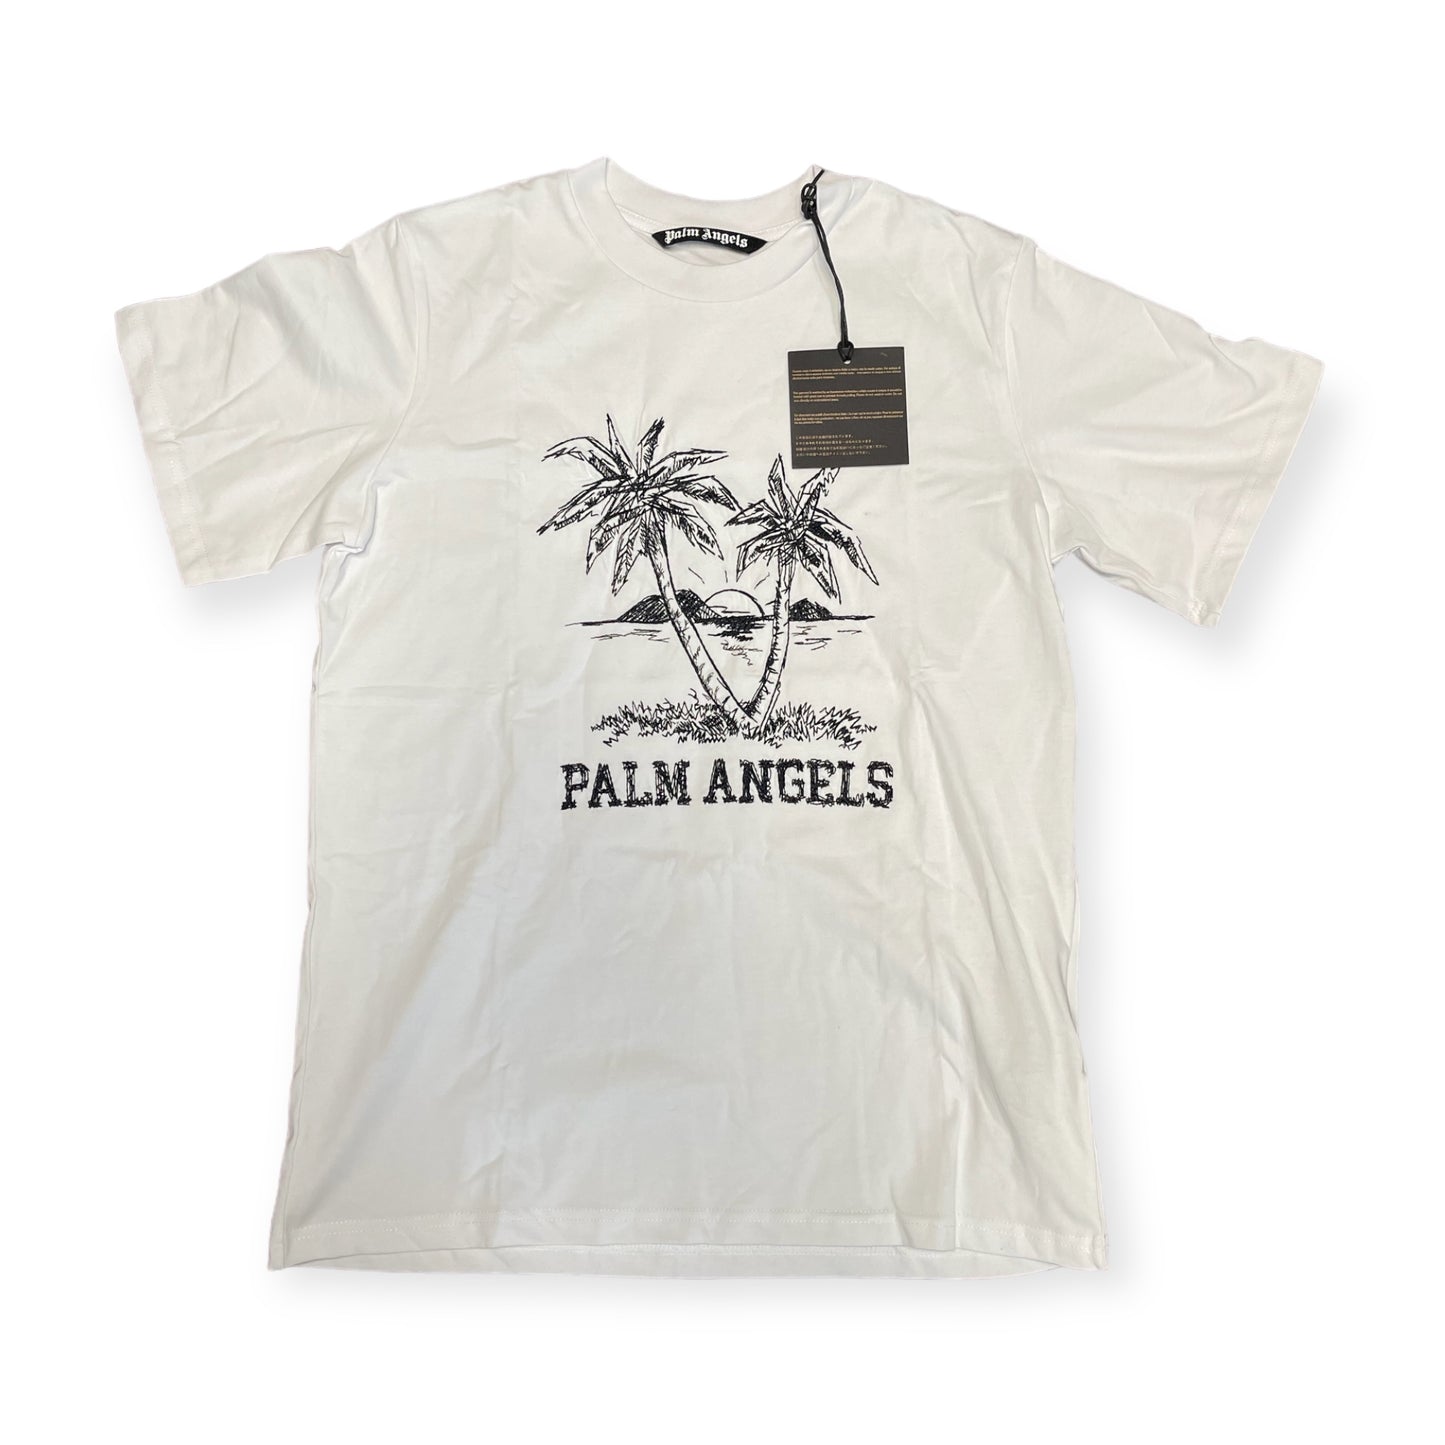 Brand New Palm Angeles Tee Size XL